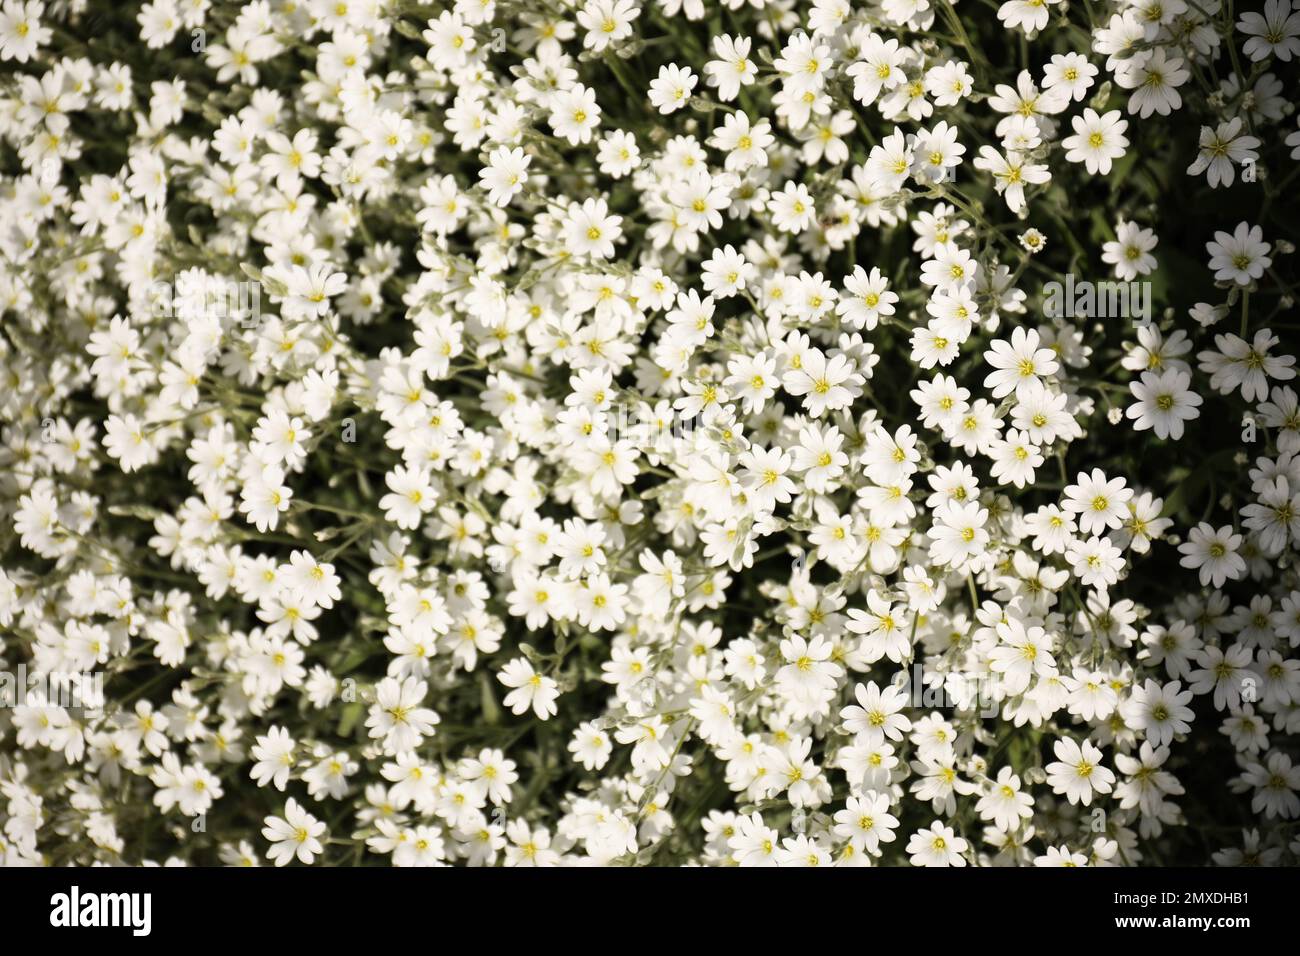 Many beautiful white meadowfoam flowers growing outdoors Stock Photo